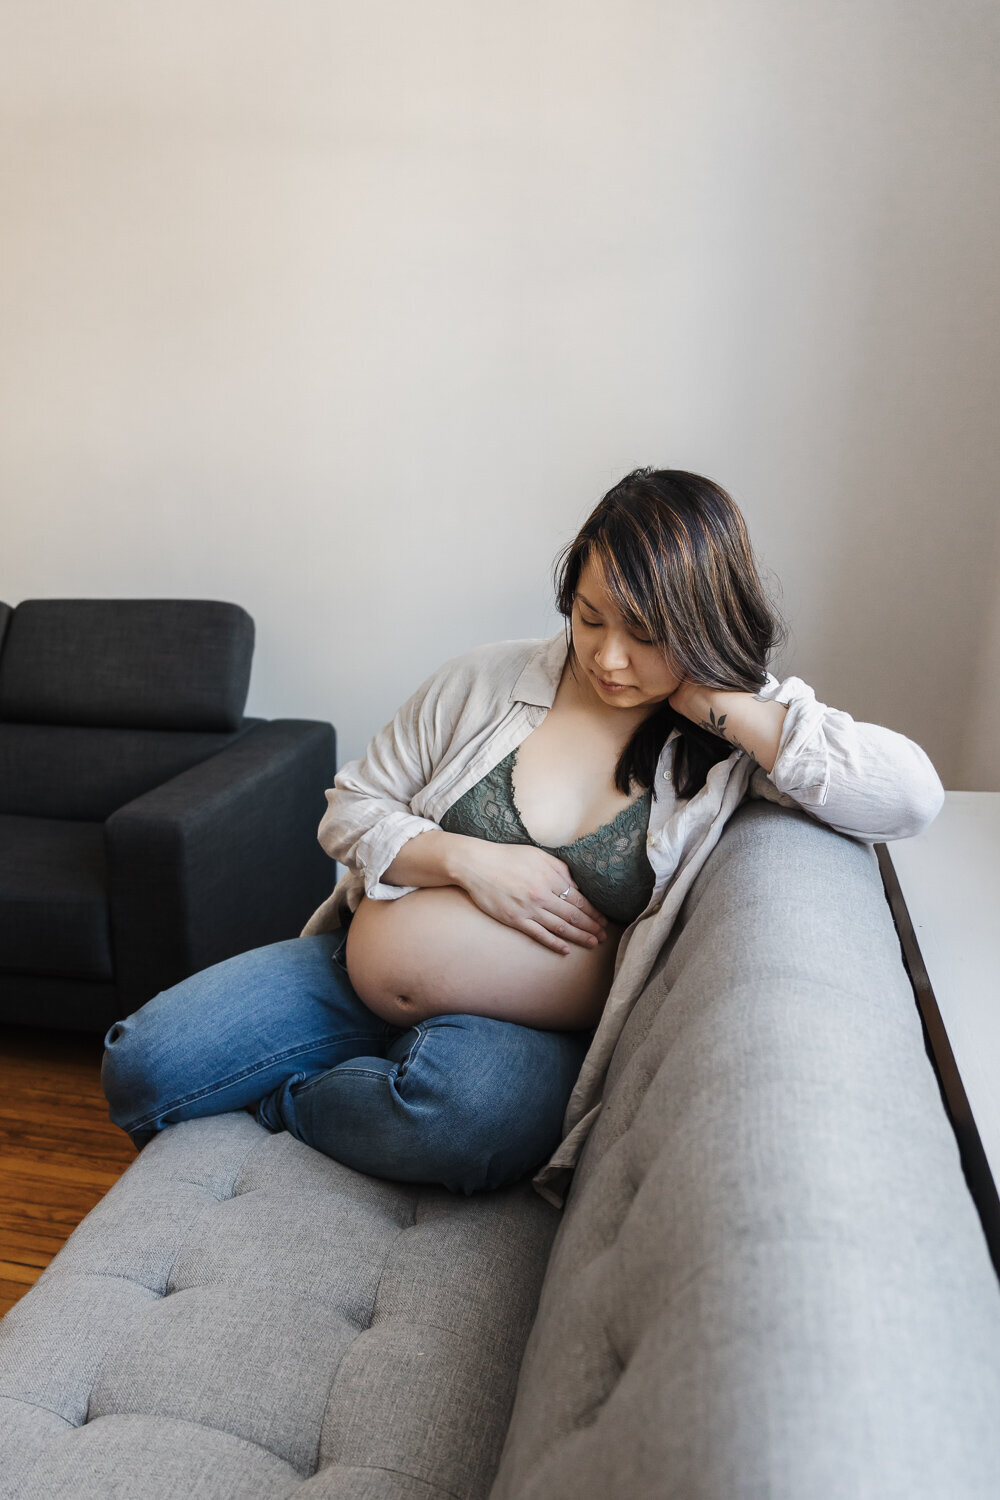 Toronto Maternity Photography at home